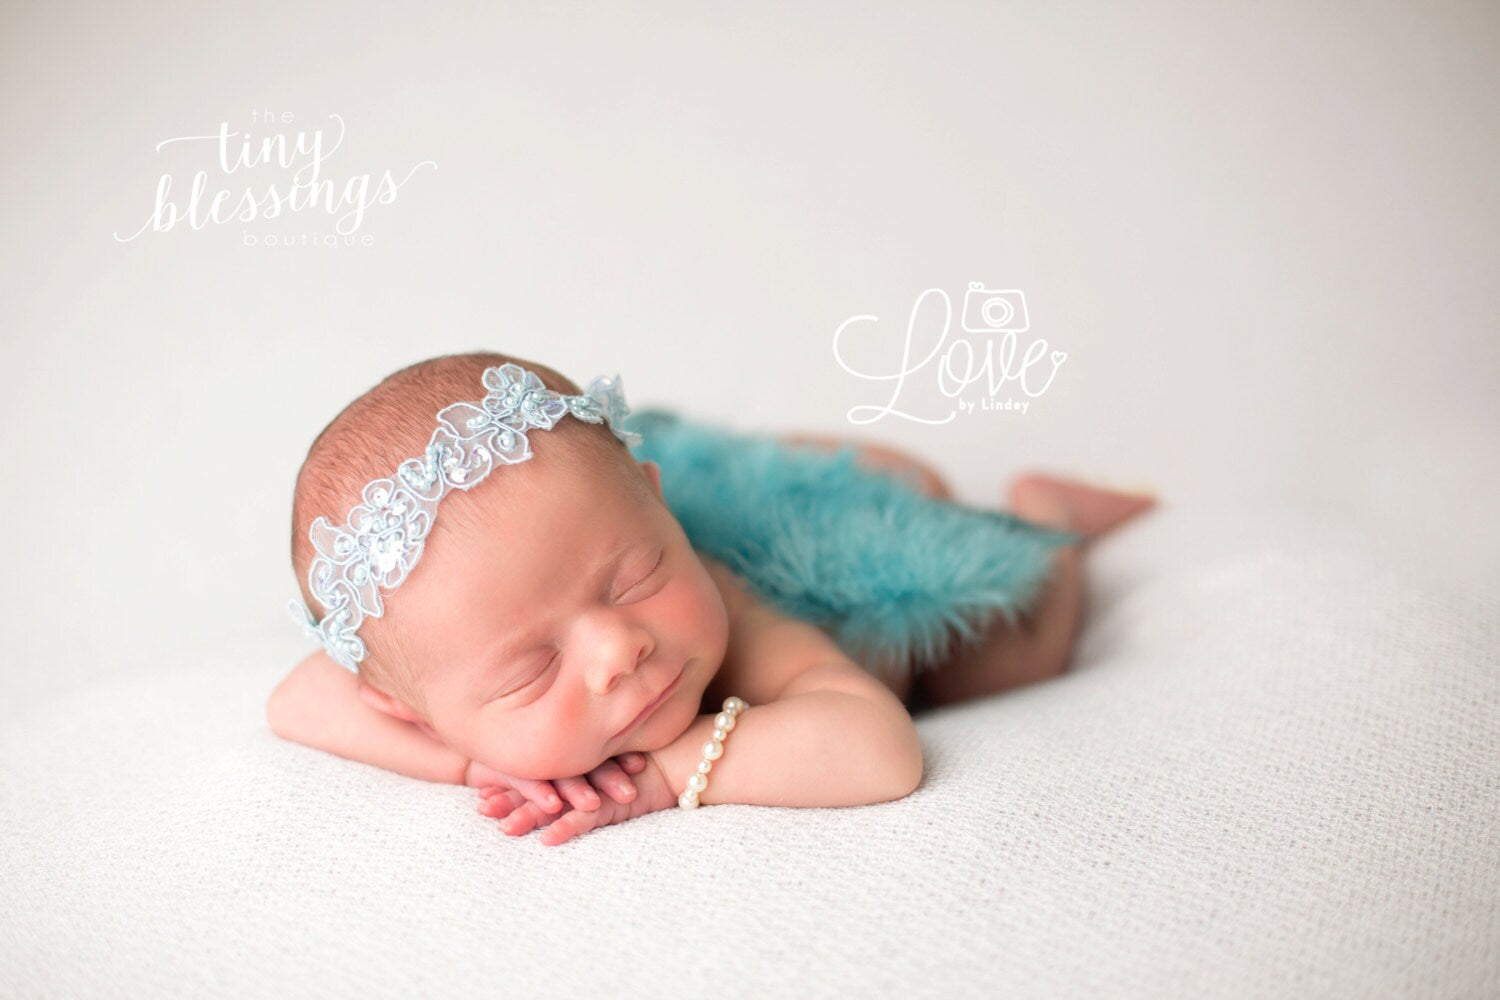 Aqua Baby Wing Set / Baby Angel Wing Set / Lace Beaded Headband / Angel Wings / Newborn Photo Prop / Newborn Wing / Newborn Angel Costume